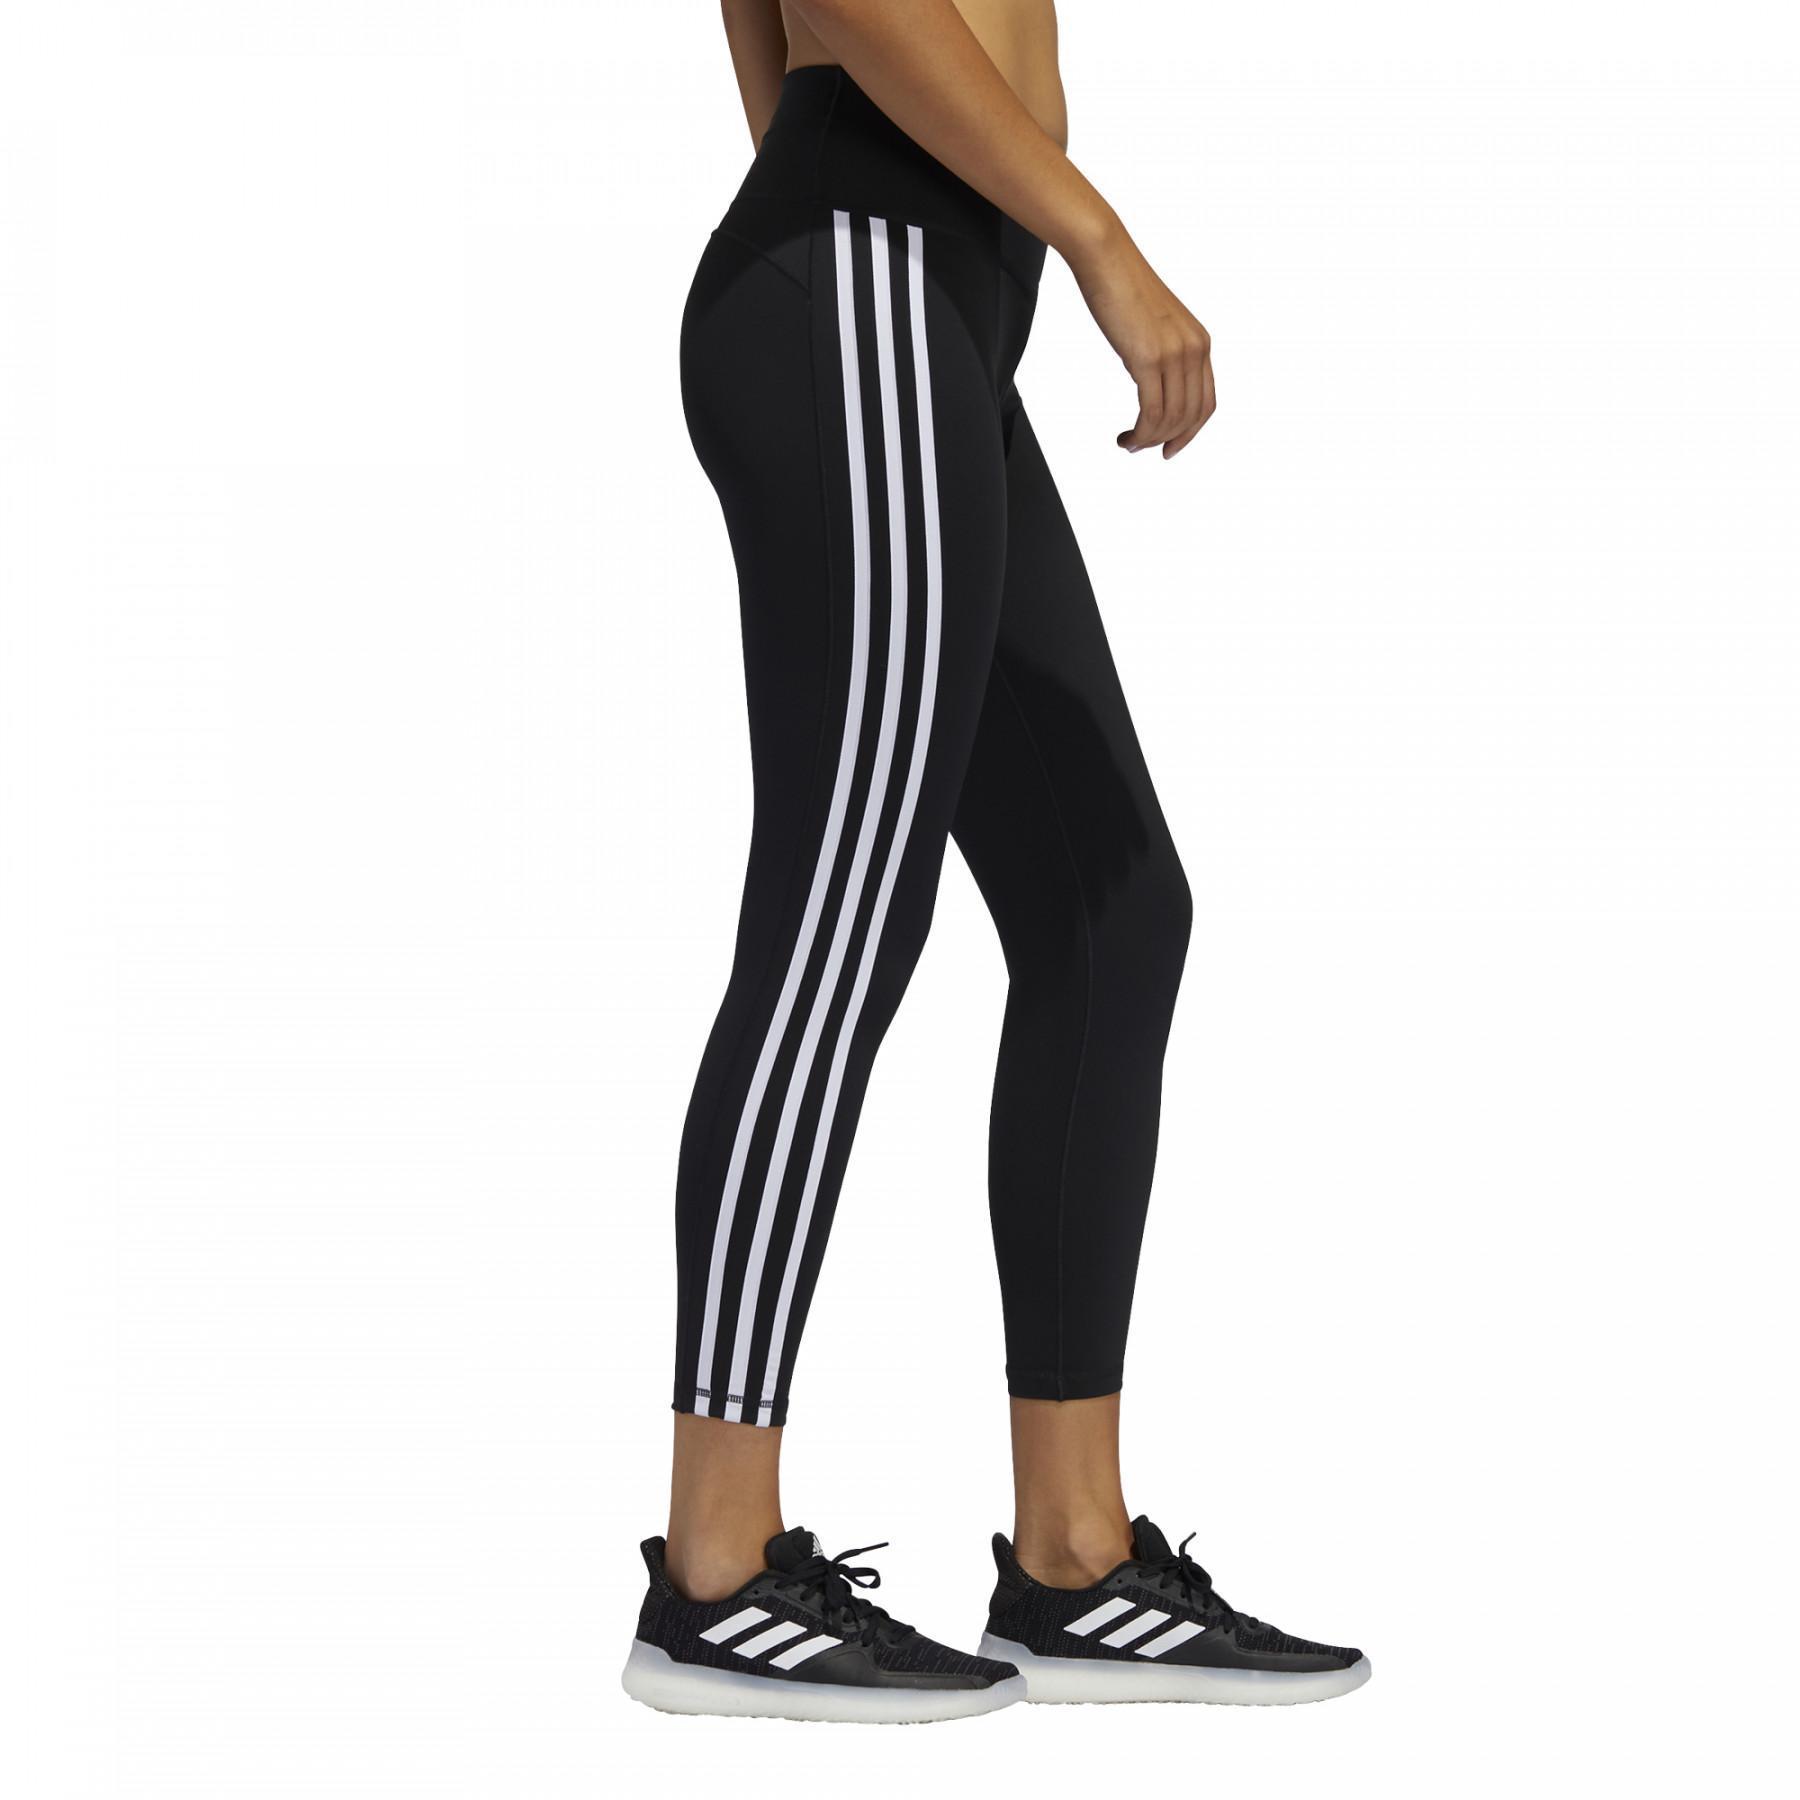 Legging women 7/8 adidas Believe This 3-Stripes